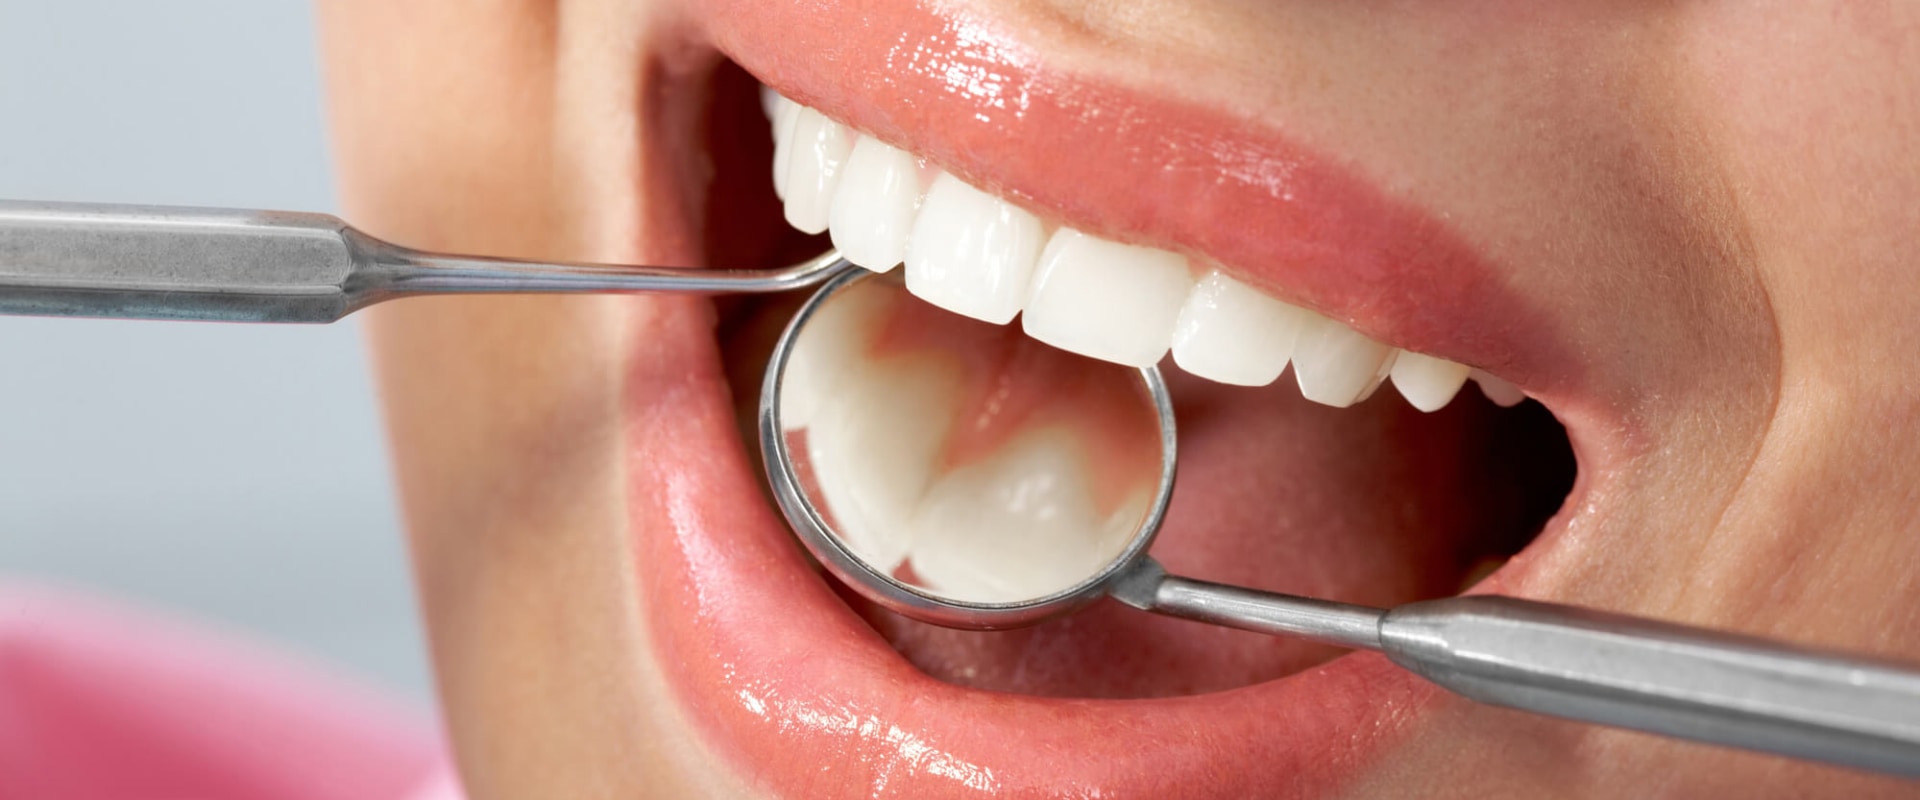 Why did you choose endodontics?